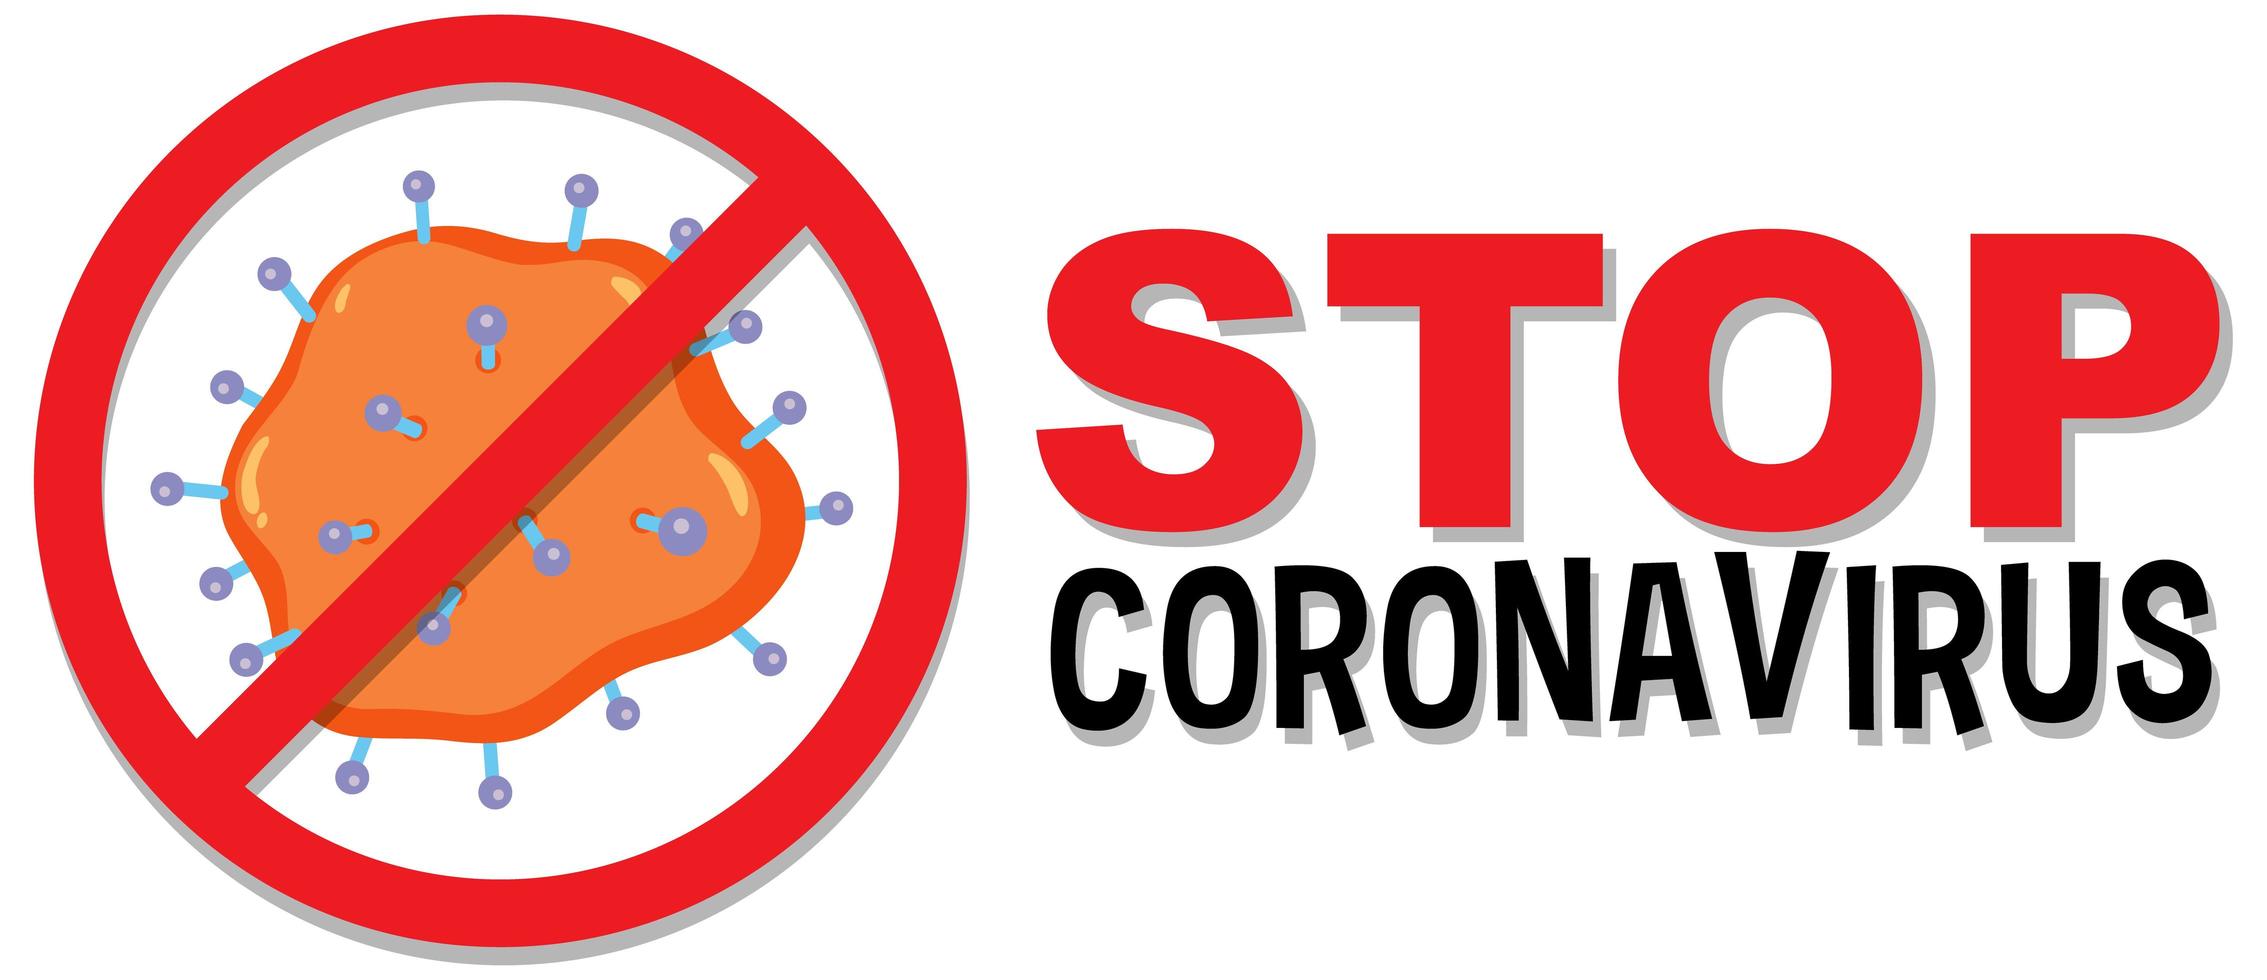 banner de parada de coronavírus vetor